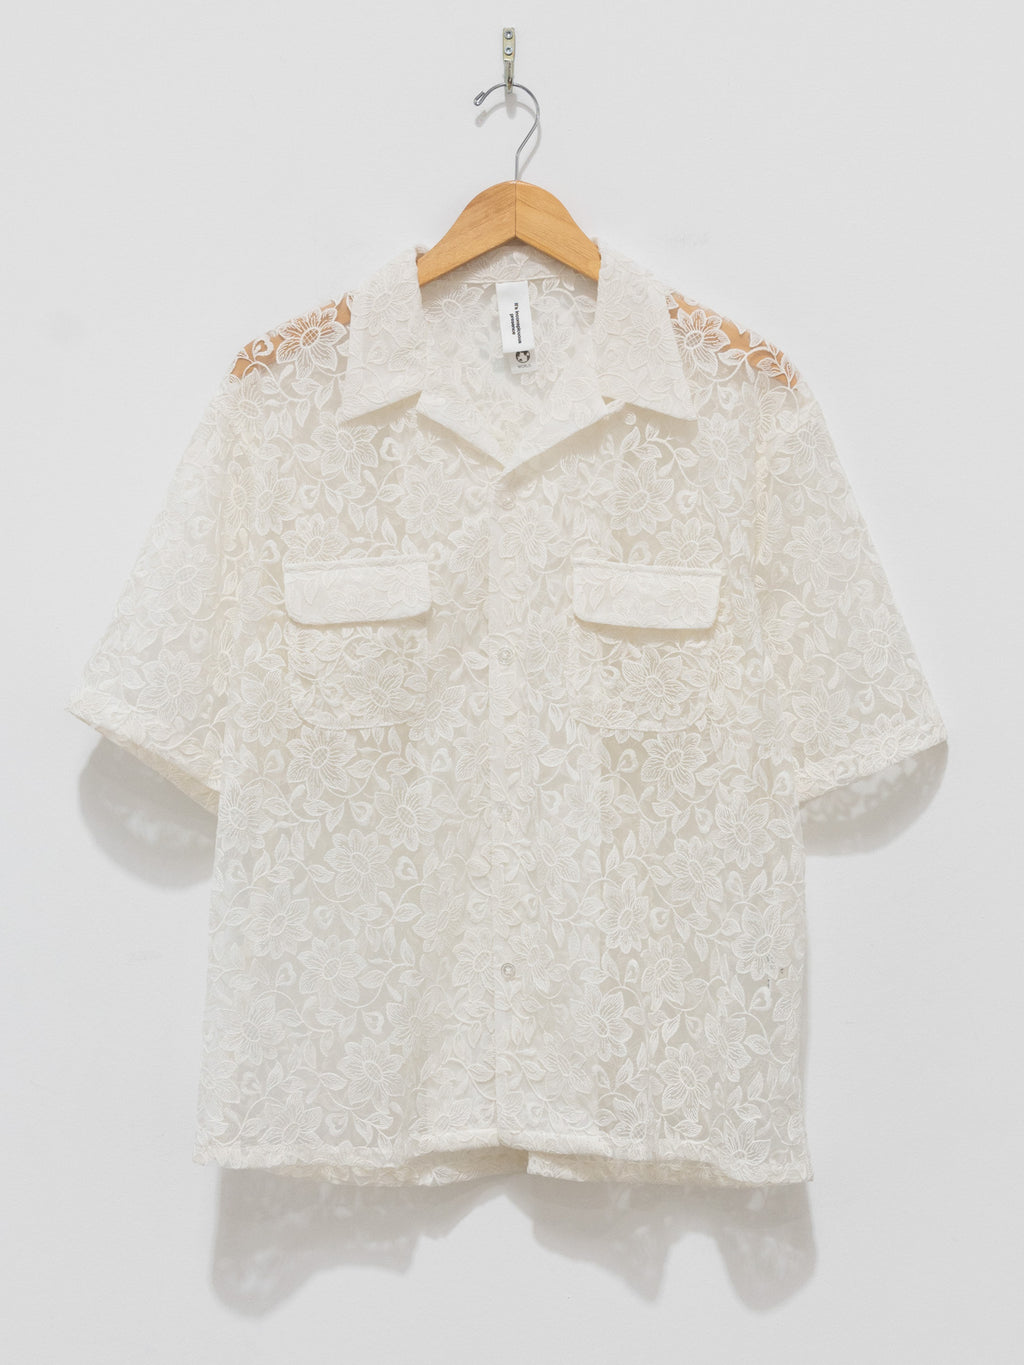 Namu Shop - Niche Open Collar S/S Shirt - White Mesh Flower